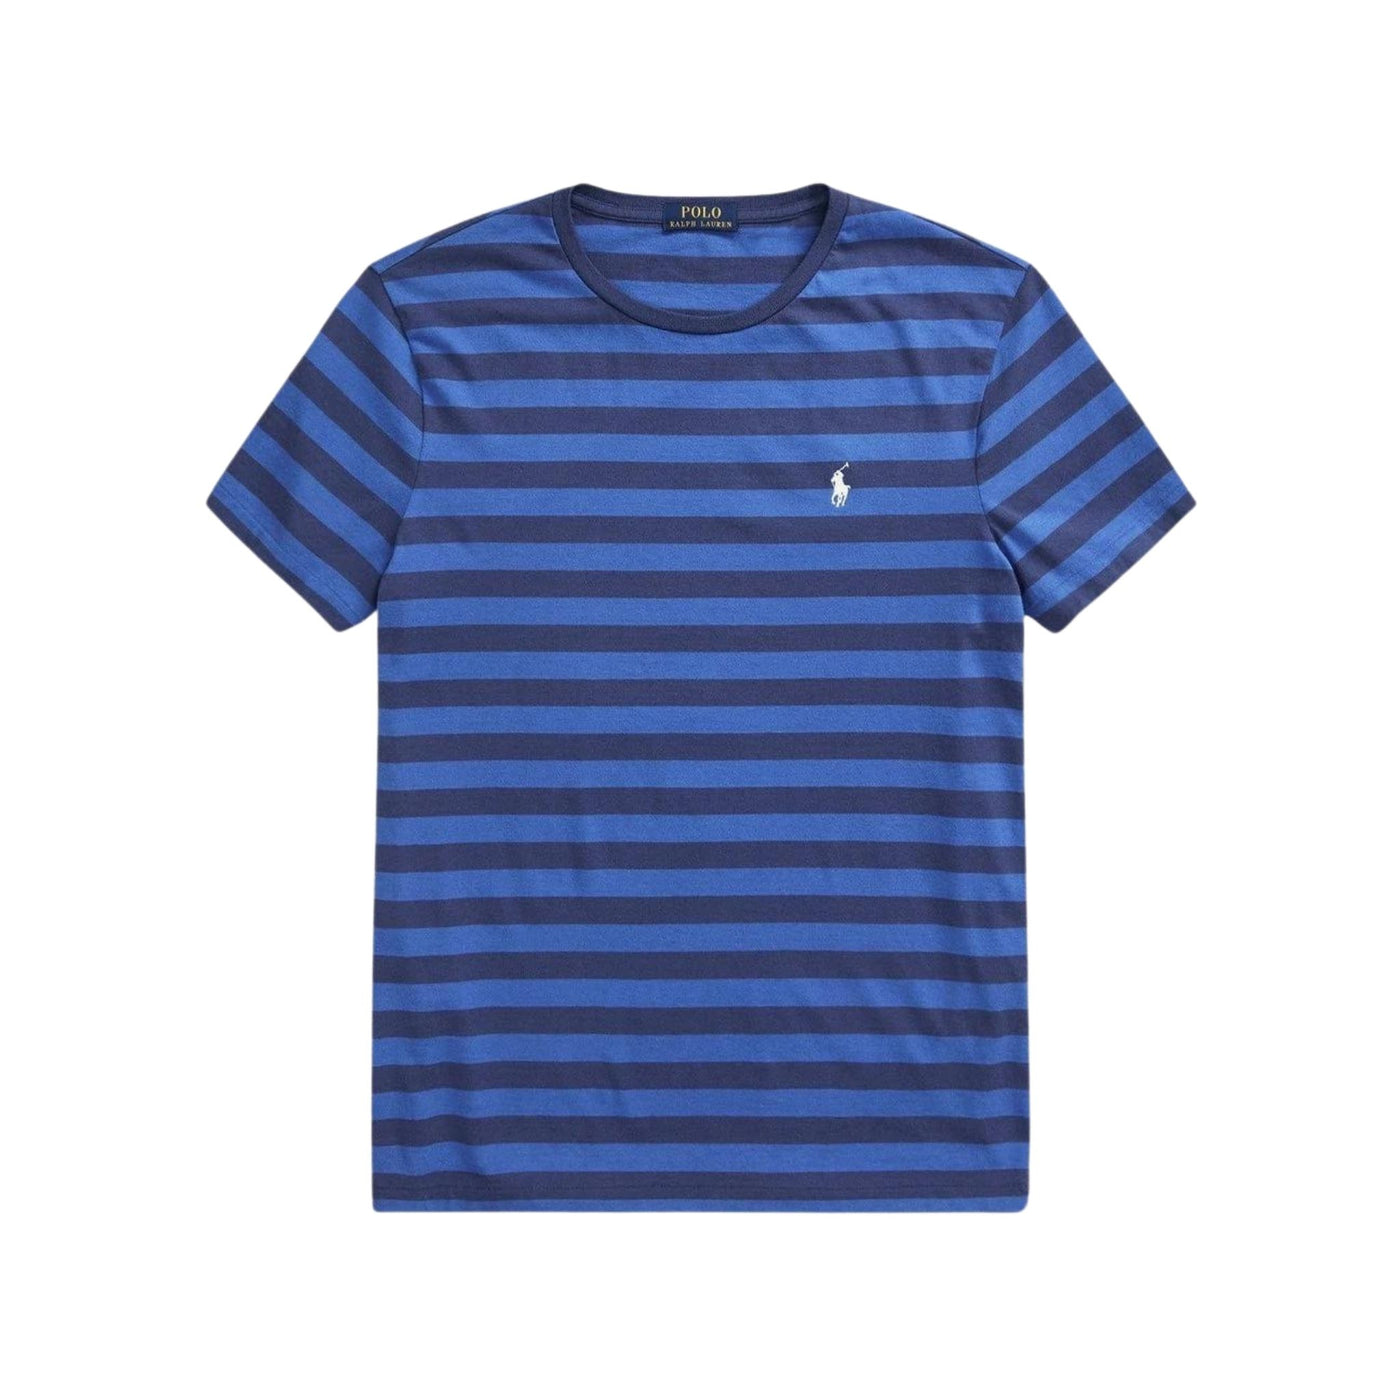 T-shirt uomo blu navy firmata Polo Ralph Lauren vista frontale